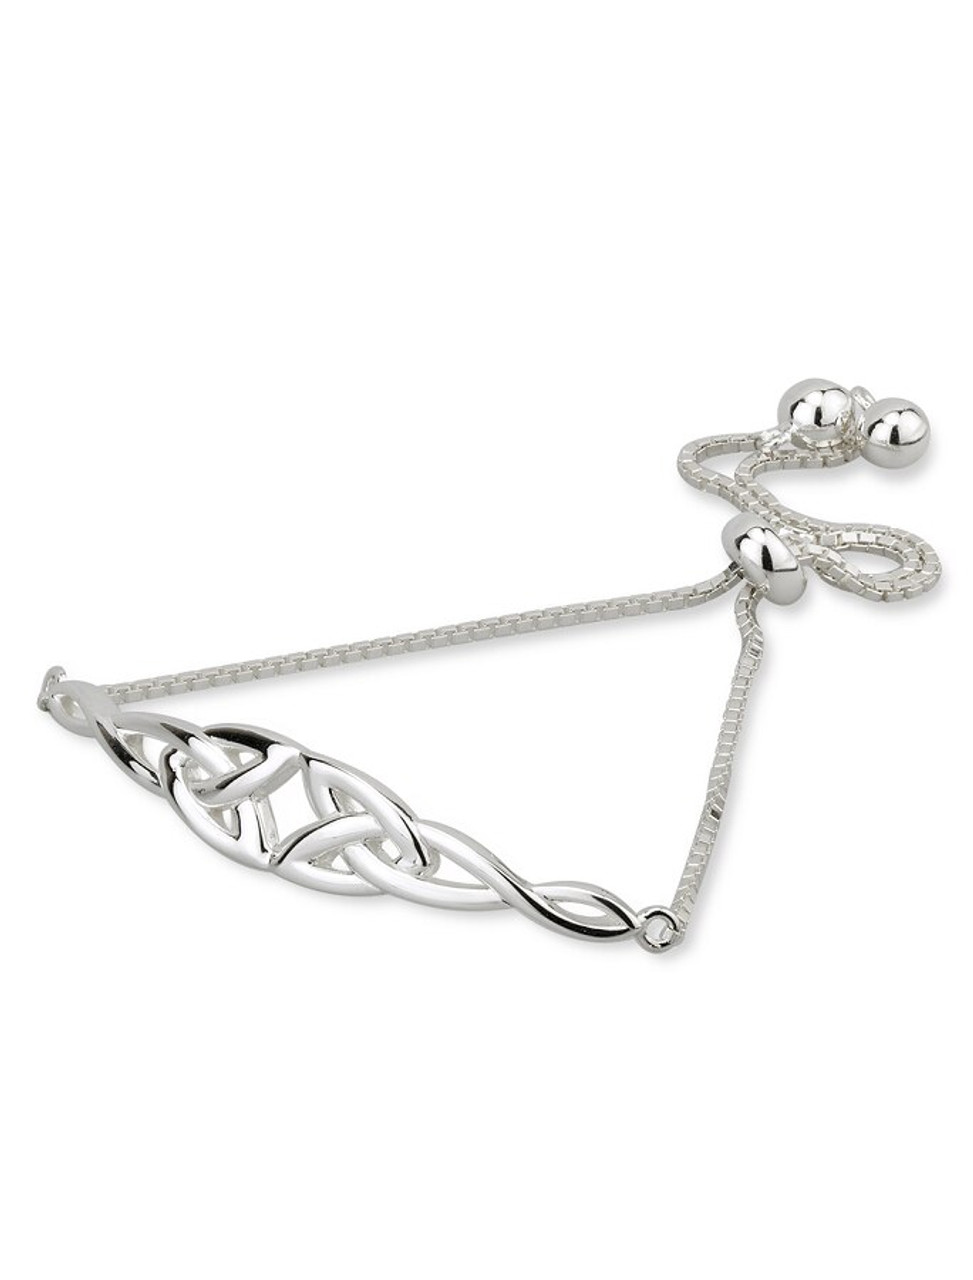 Mens Irish Jewelry, Heavy Sterling Silver Celtic Trinity Knot Bracelet at